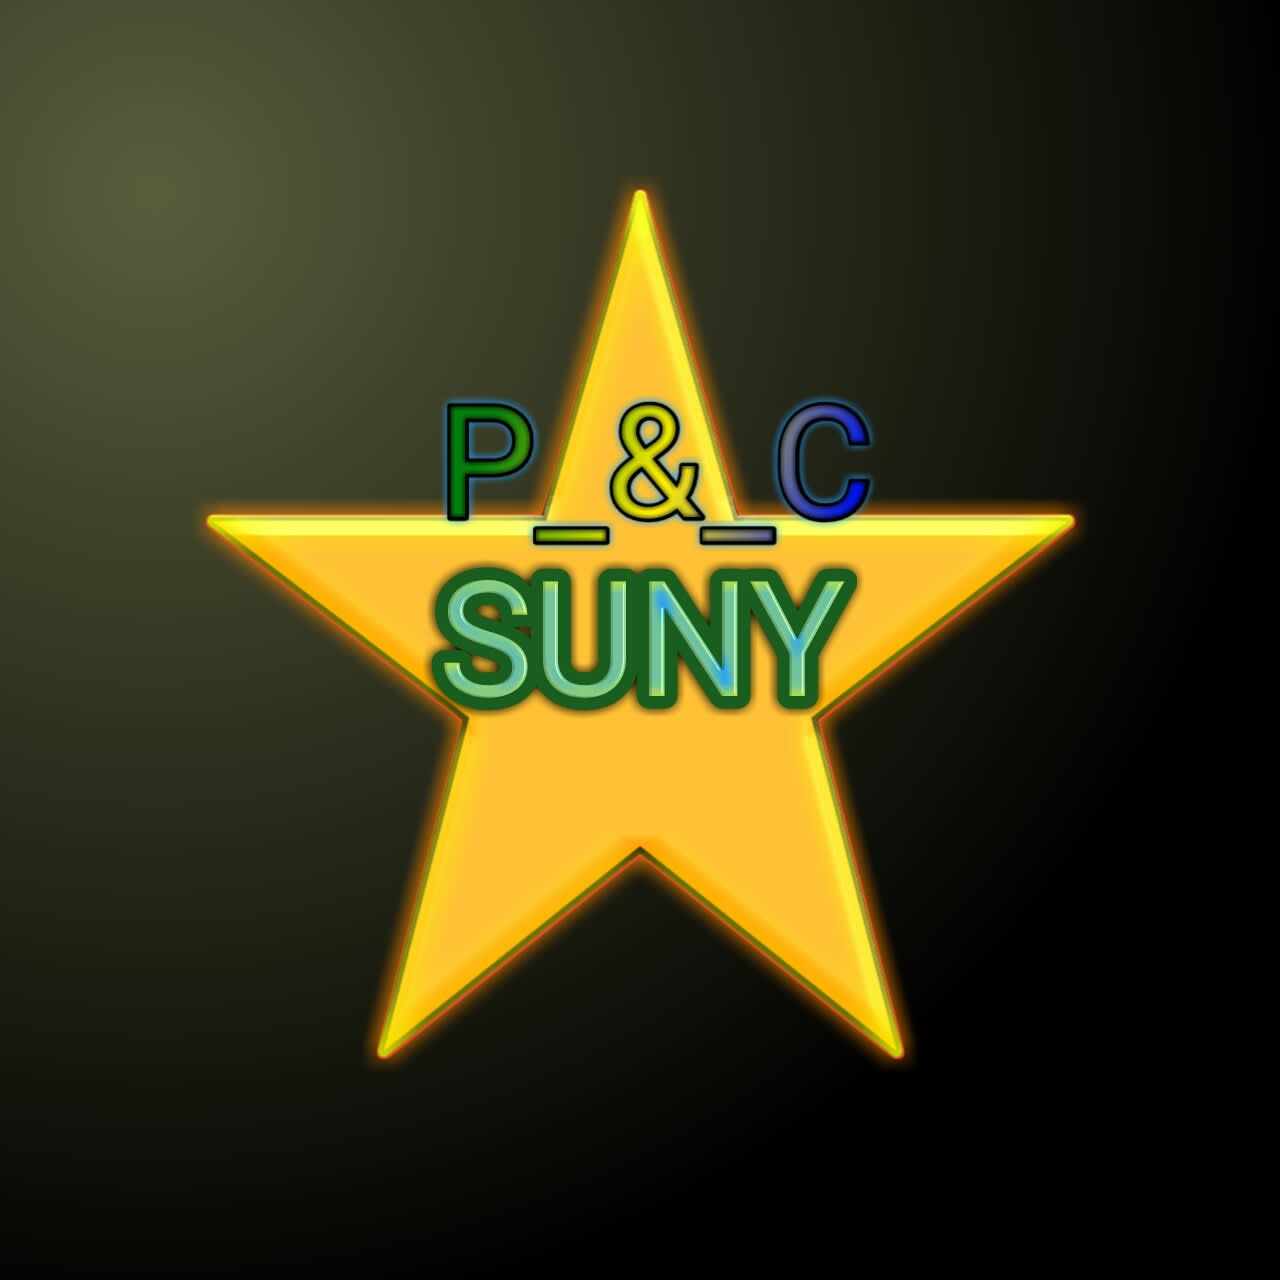 Suny P&C